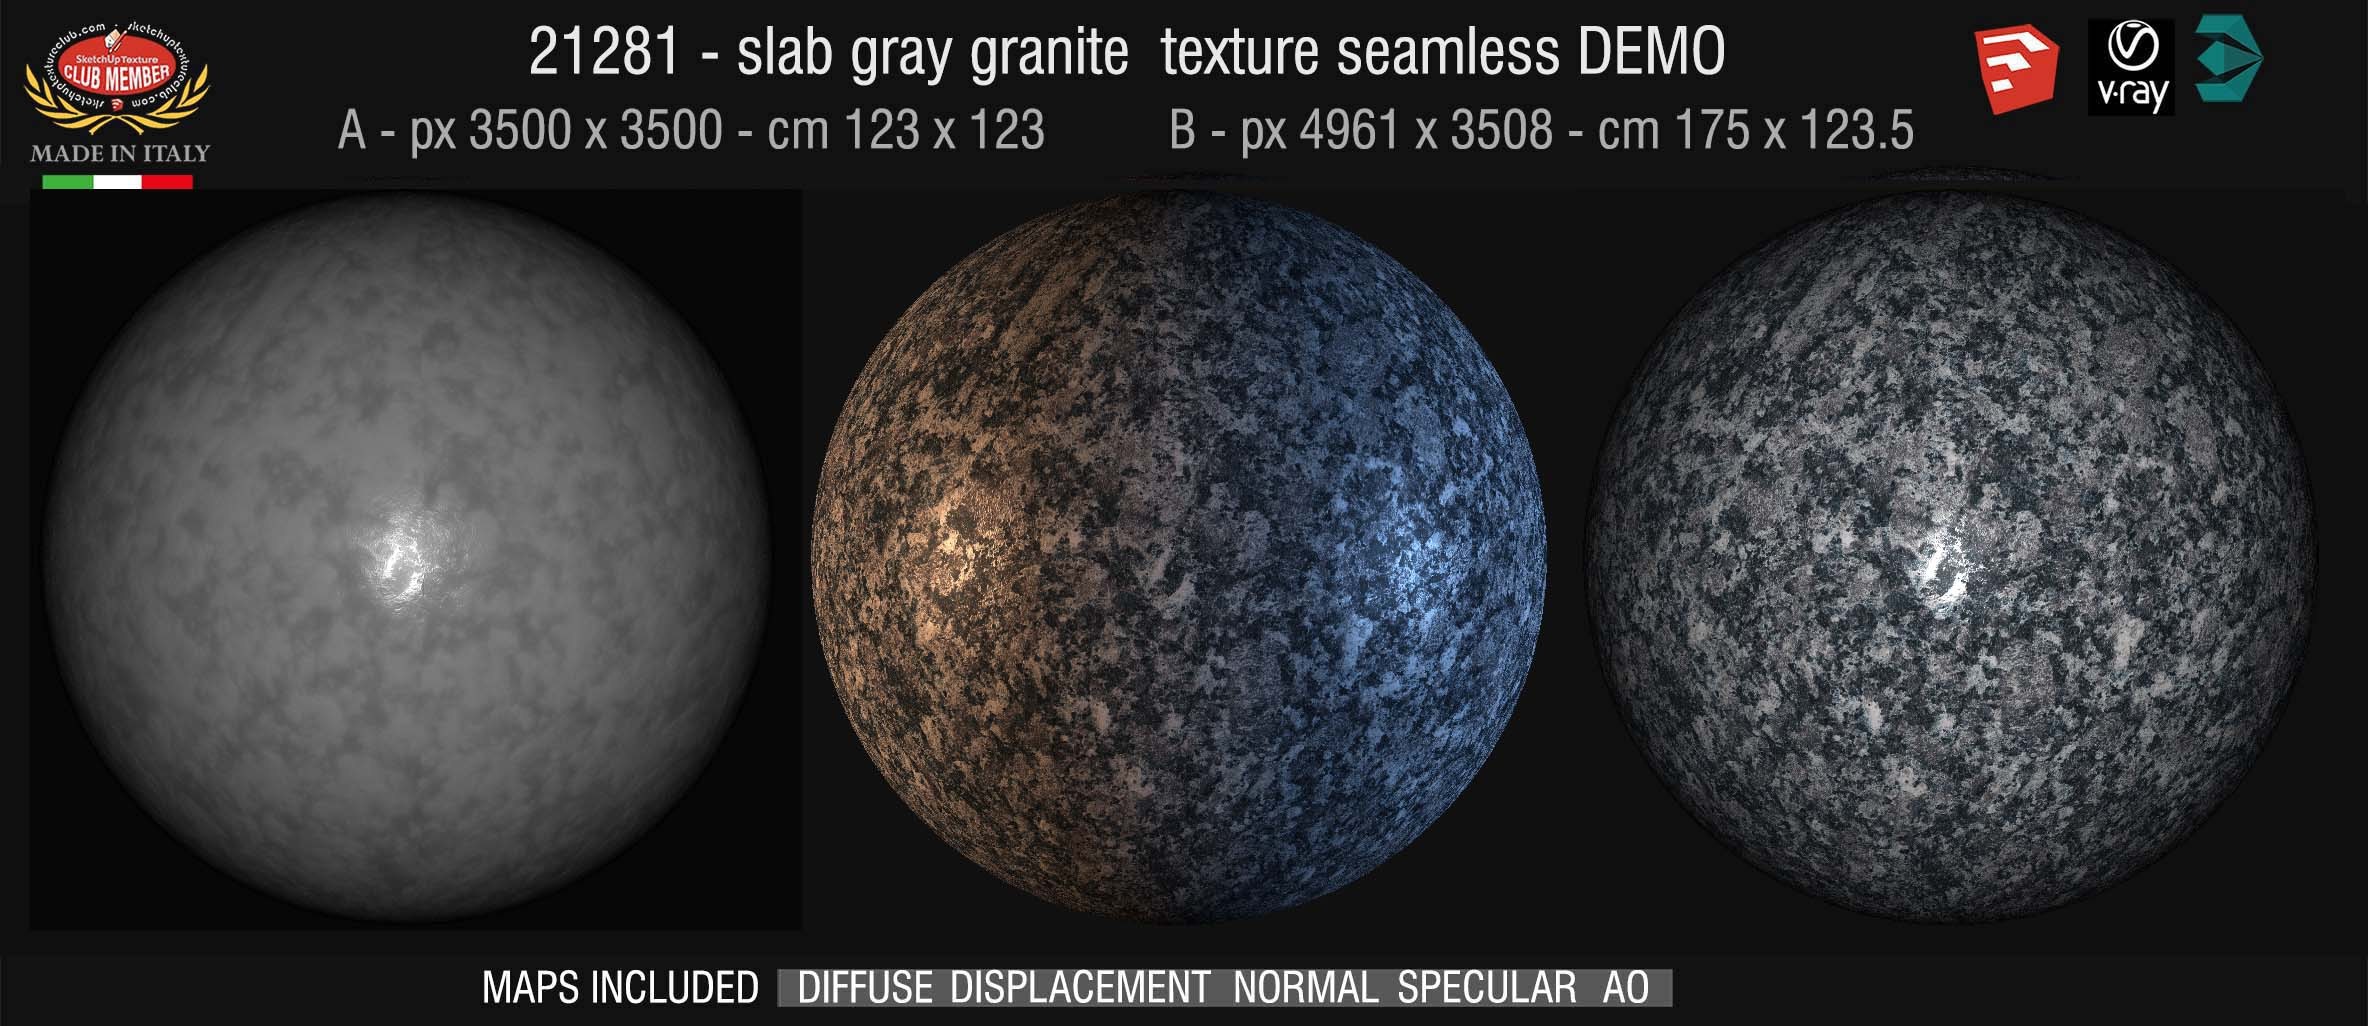 21281Slab gray granite PBR texture seamless DEMO